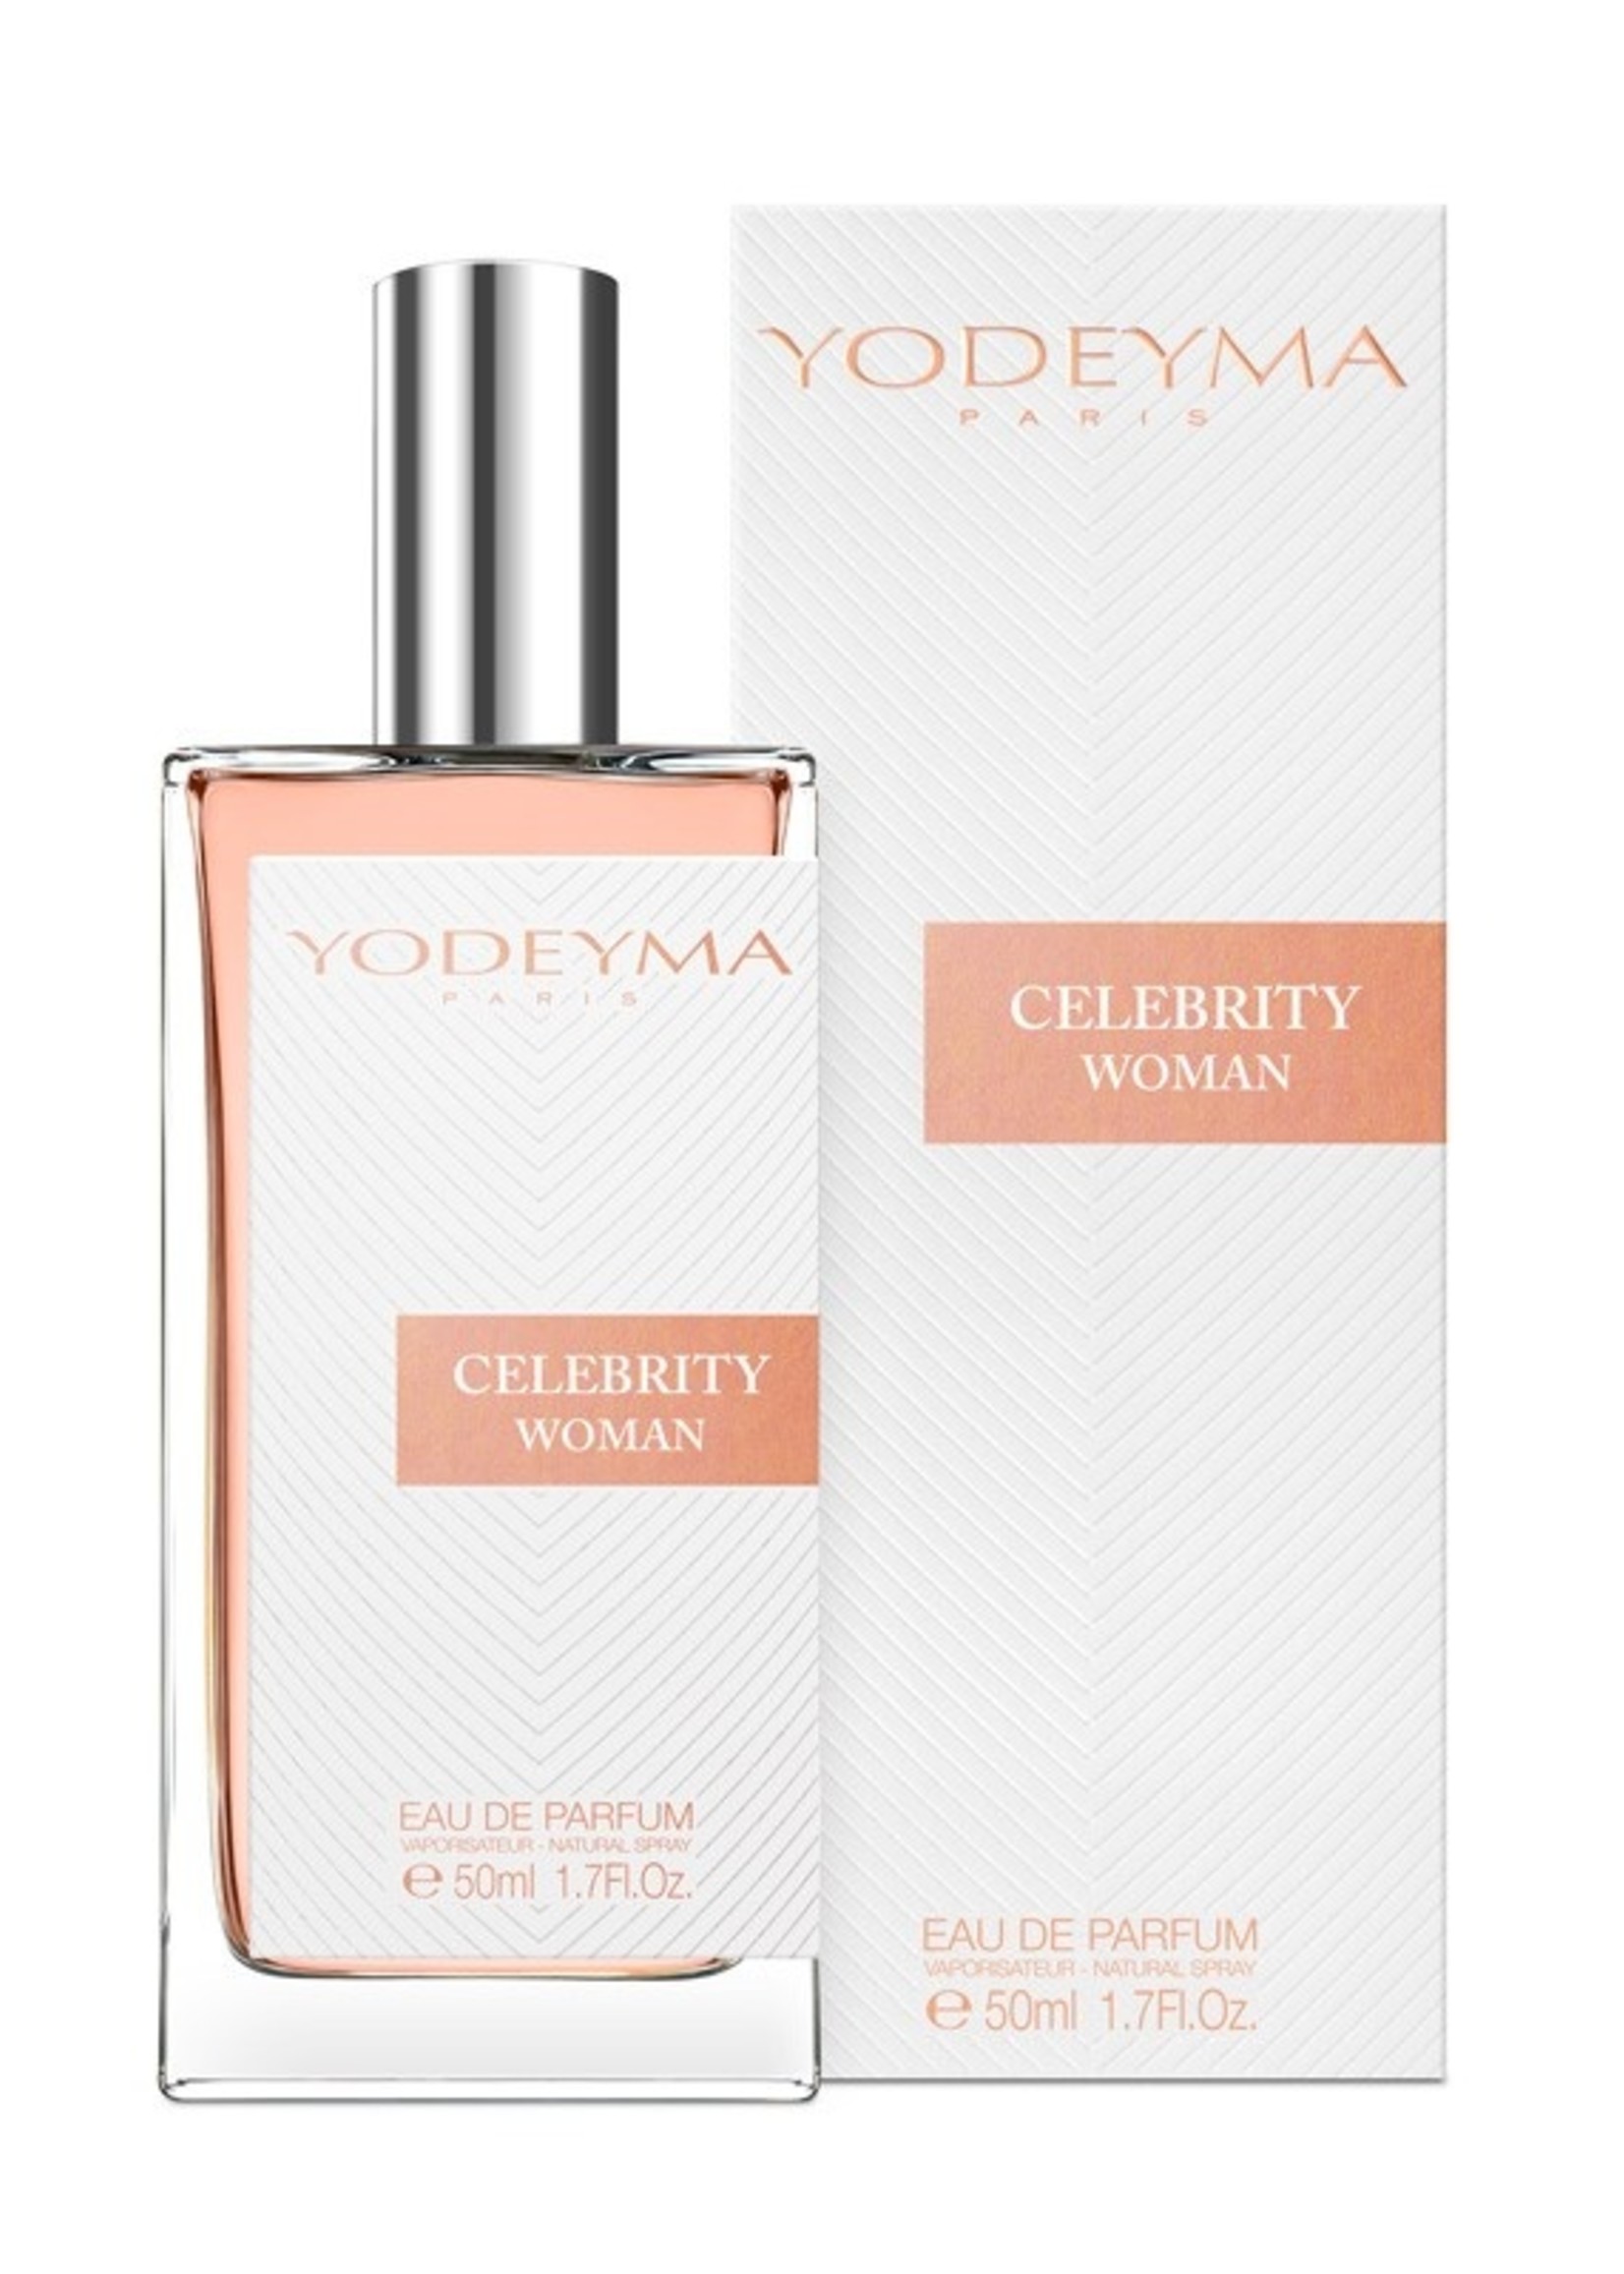 Yodeyma Parfums CELEBRITY WOMAN Eau de Parfum 50 ml.